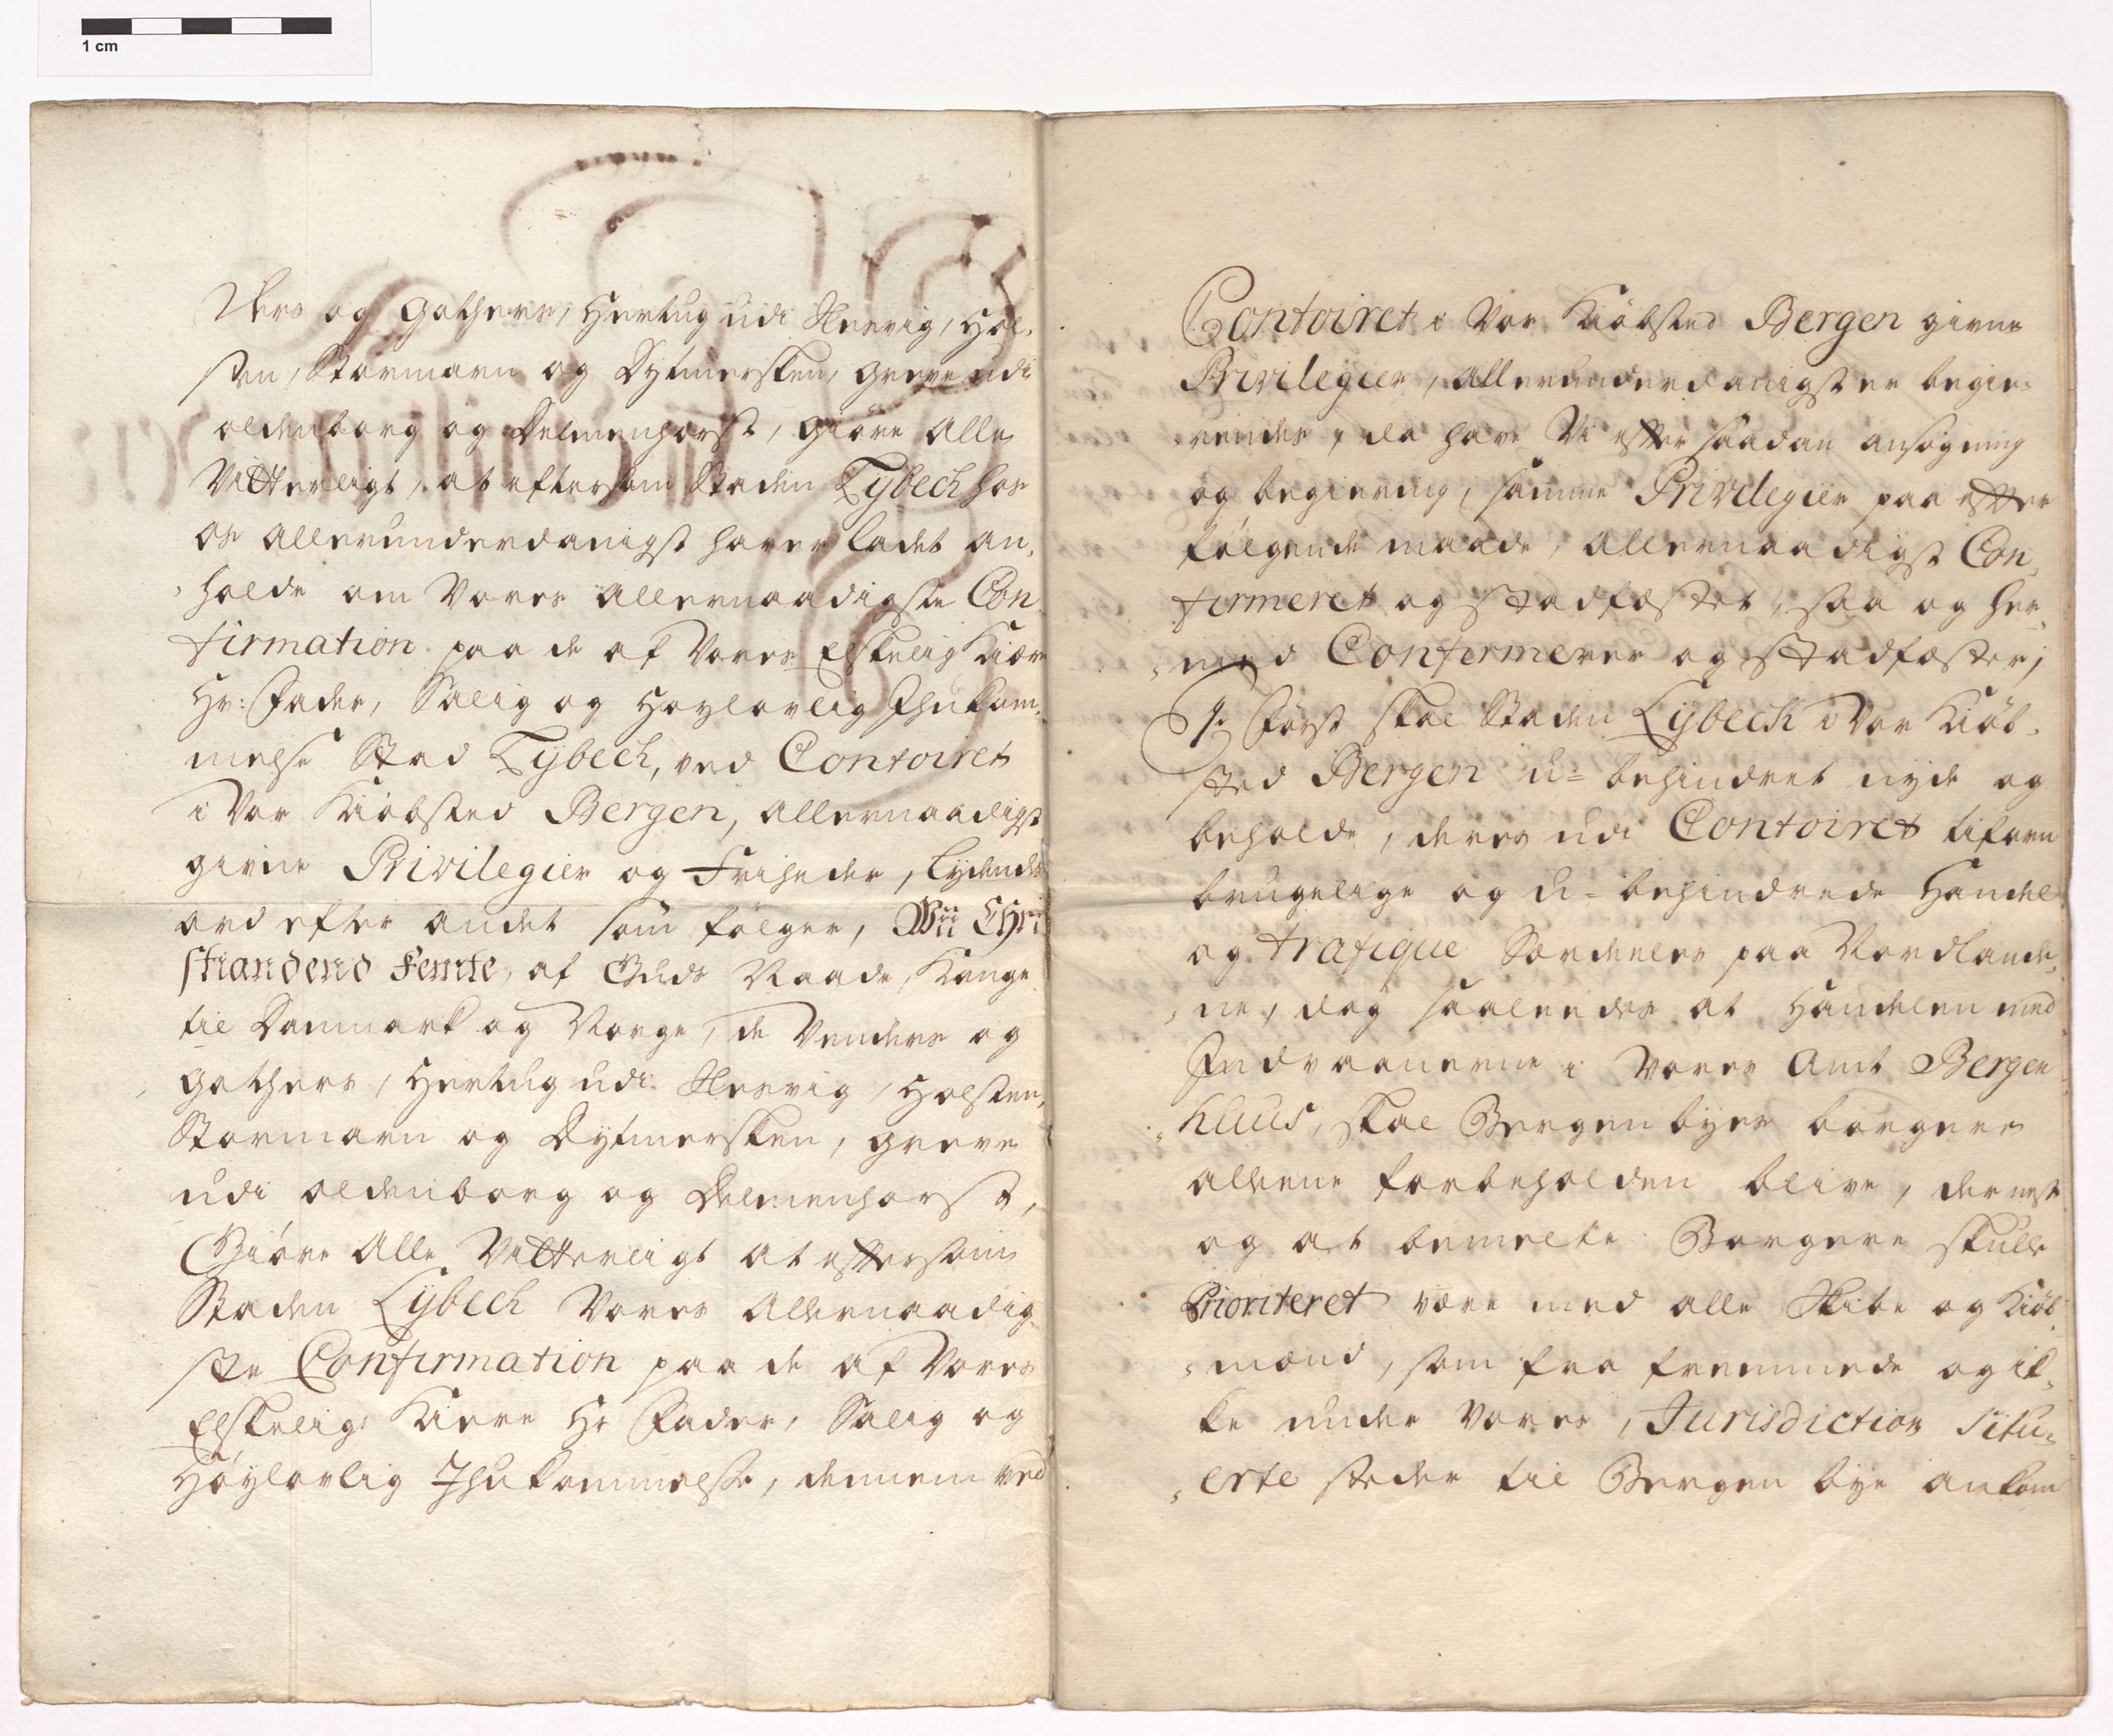 07.1 Urkunden, 3 Auswärtige Beziehungen (Externa), AHL/-/21: Norwegen (Norvagica); Kontor zu Bergen, 1247-1747, s. 1175